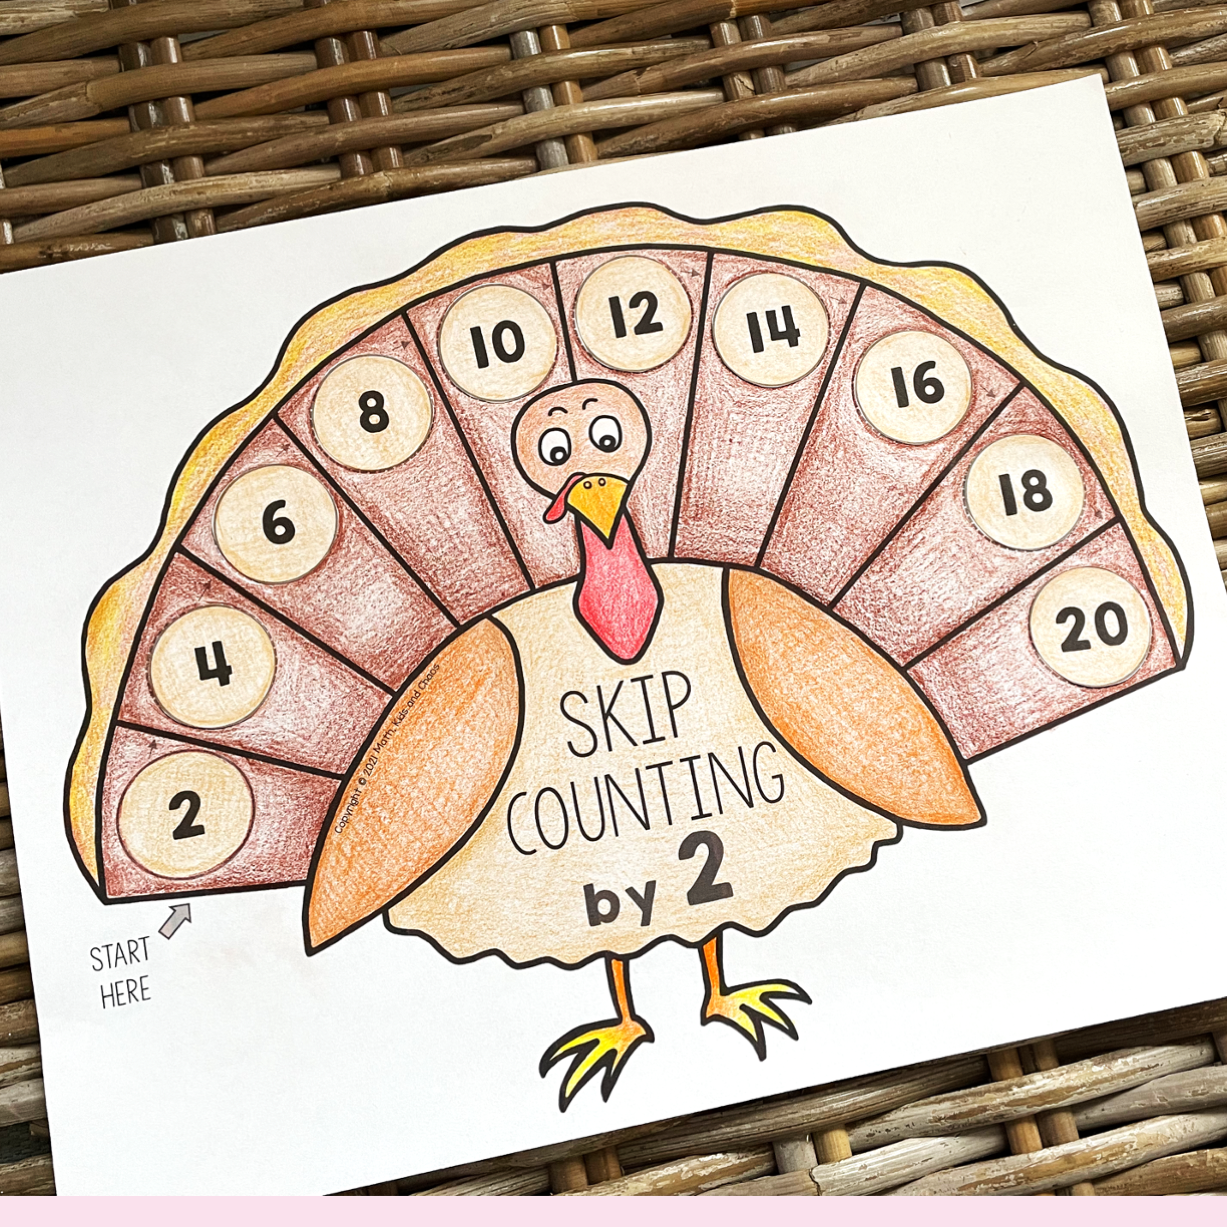 Skip Counting Turkeys (math craft)